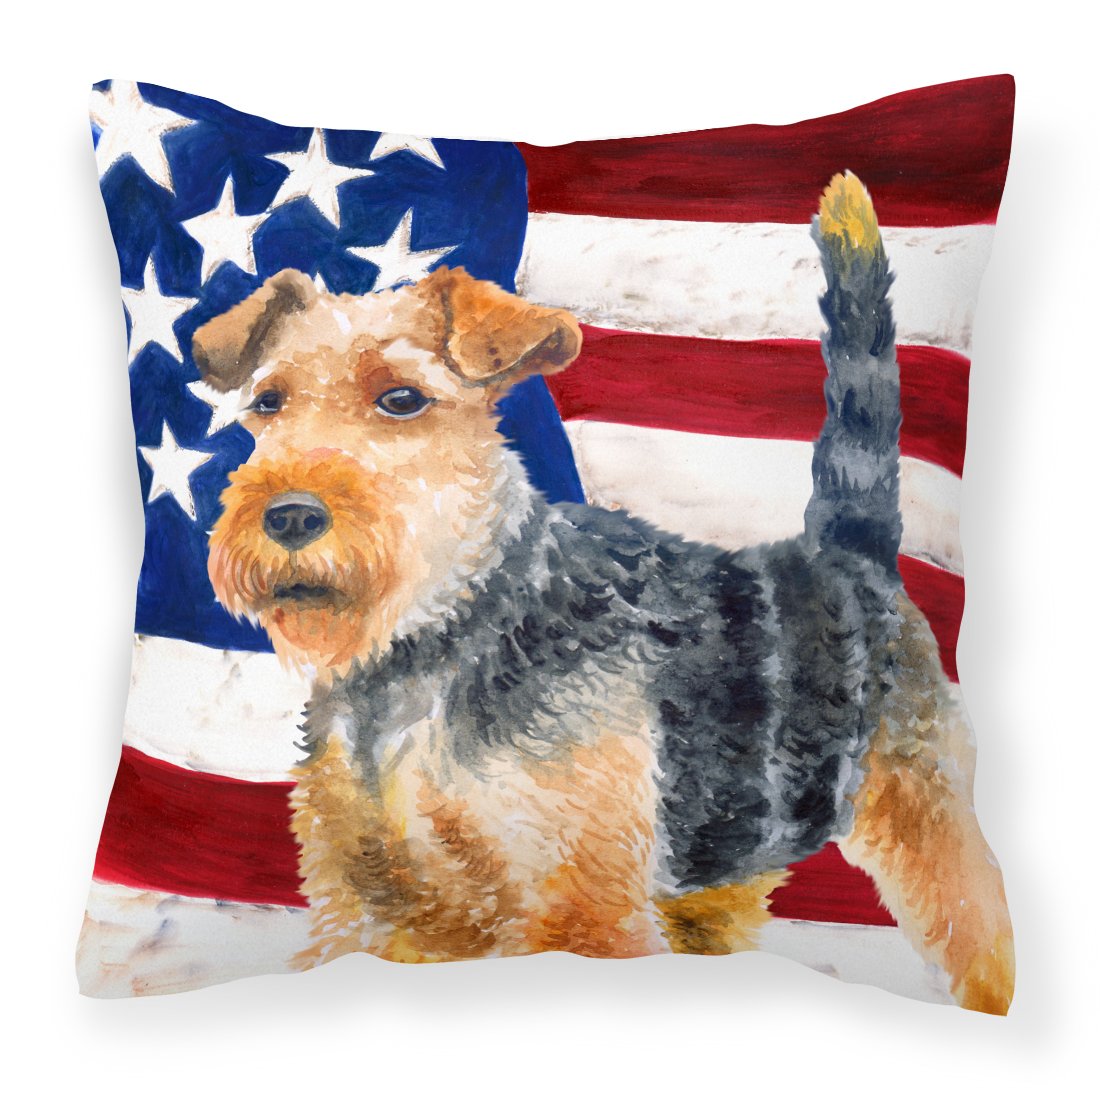 Welsh Terrier Patriotic Fabric Decorative Pillow BB9700PW1818 by Caroline's Treasures